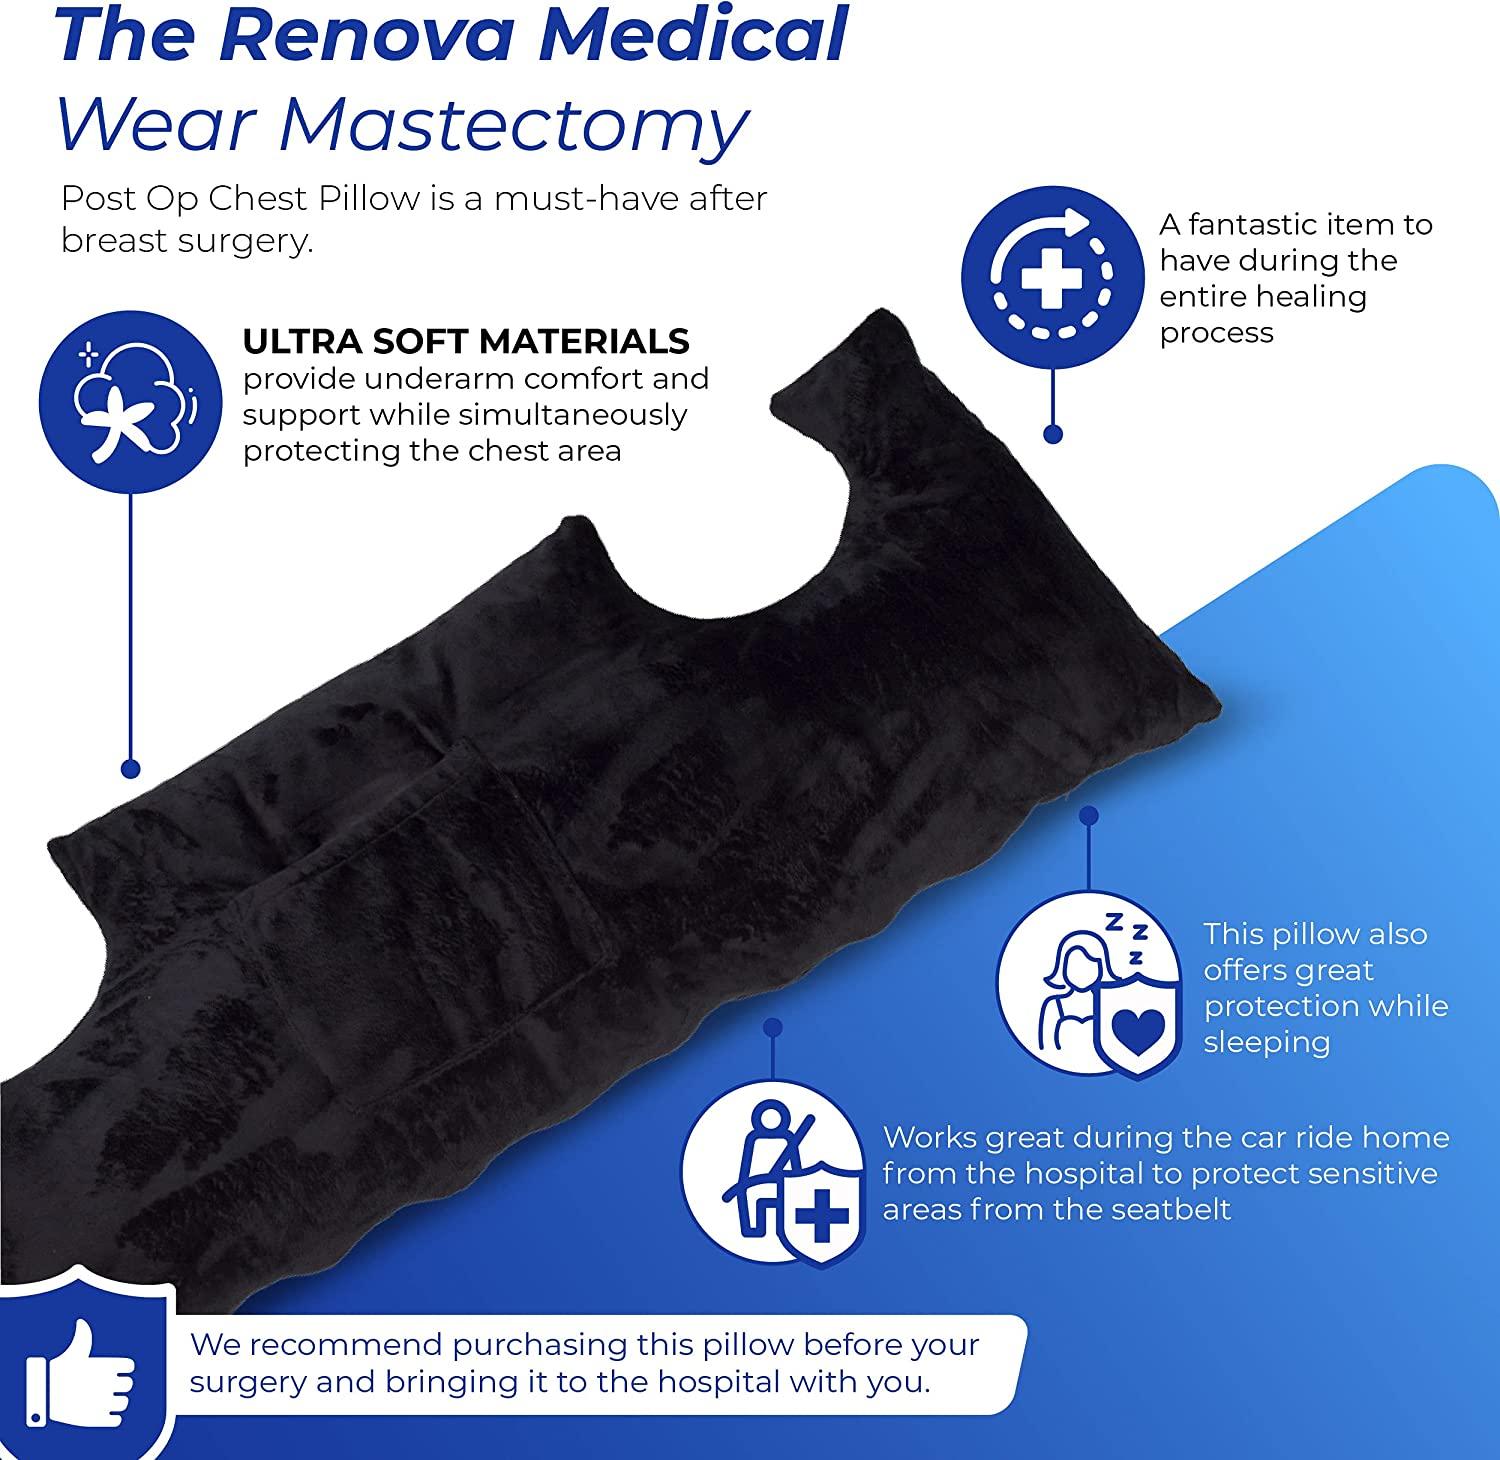 Post Surgery Bra - Renova Medical Wear